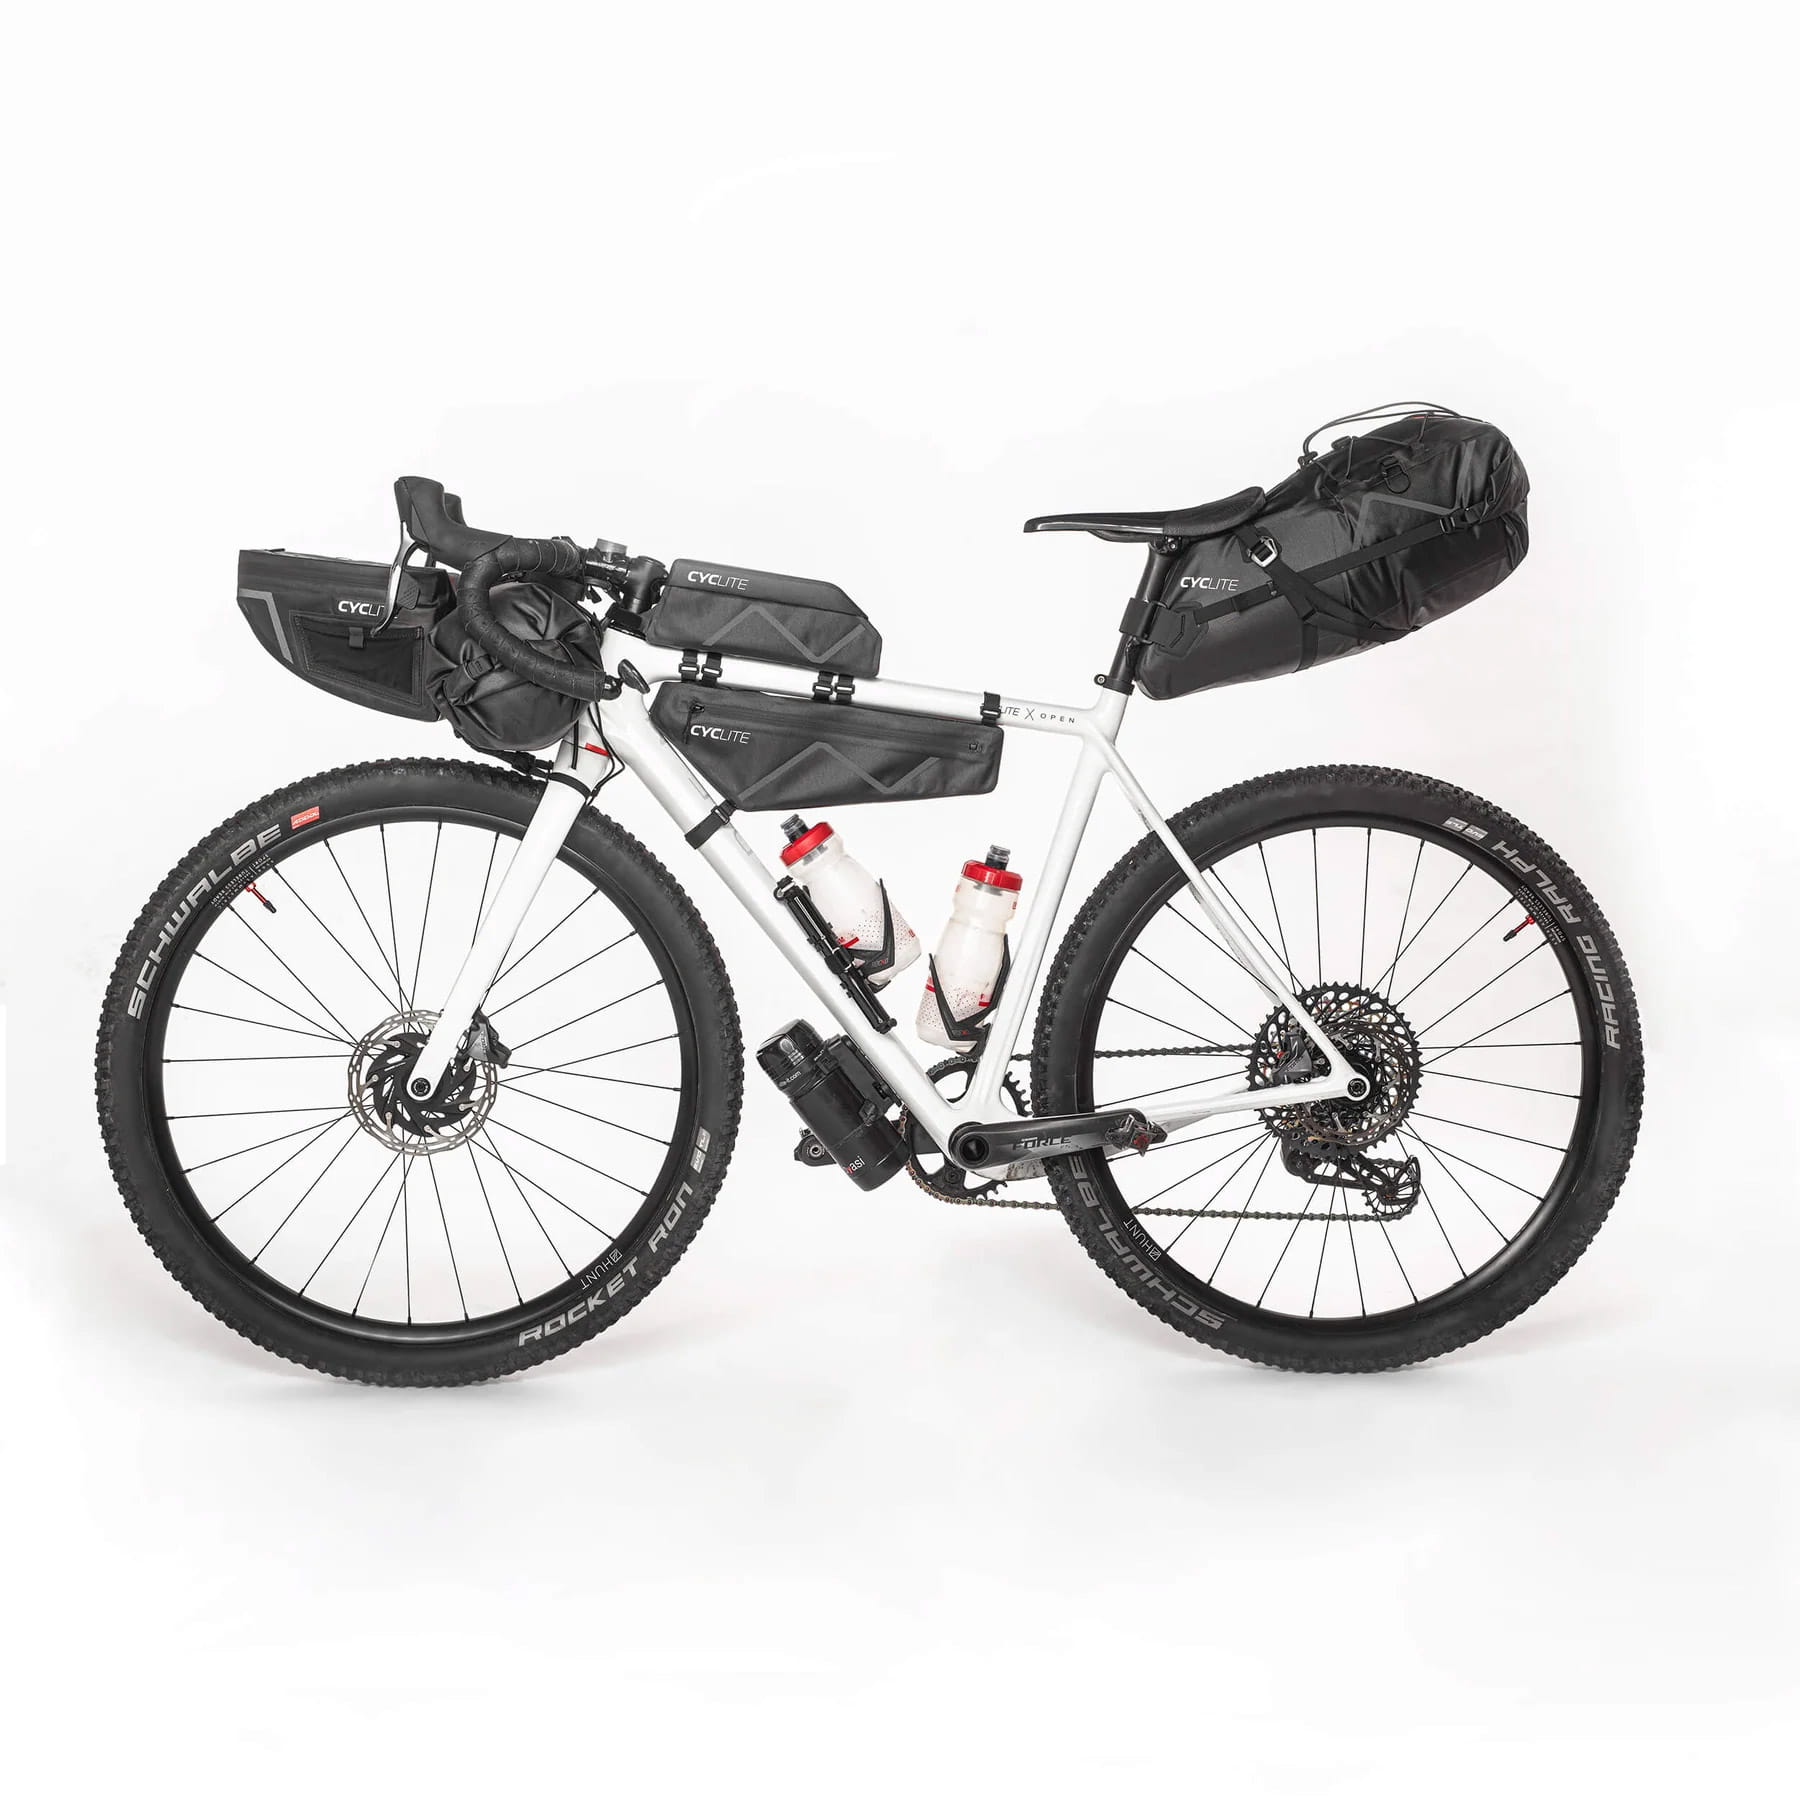 Cyclite Saddle Bag / 01 Satteltasche 12.9L